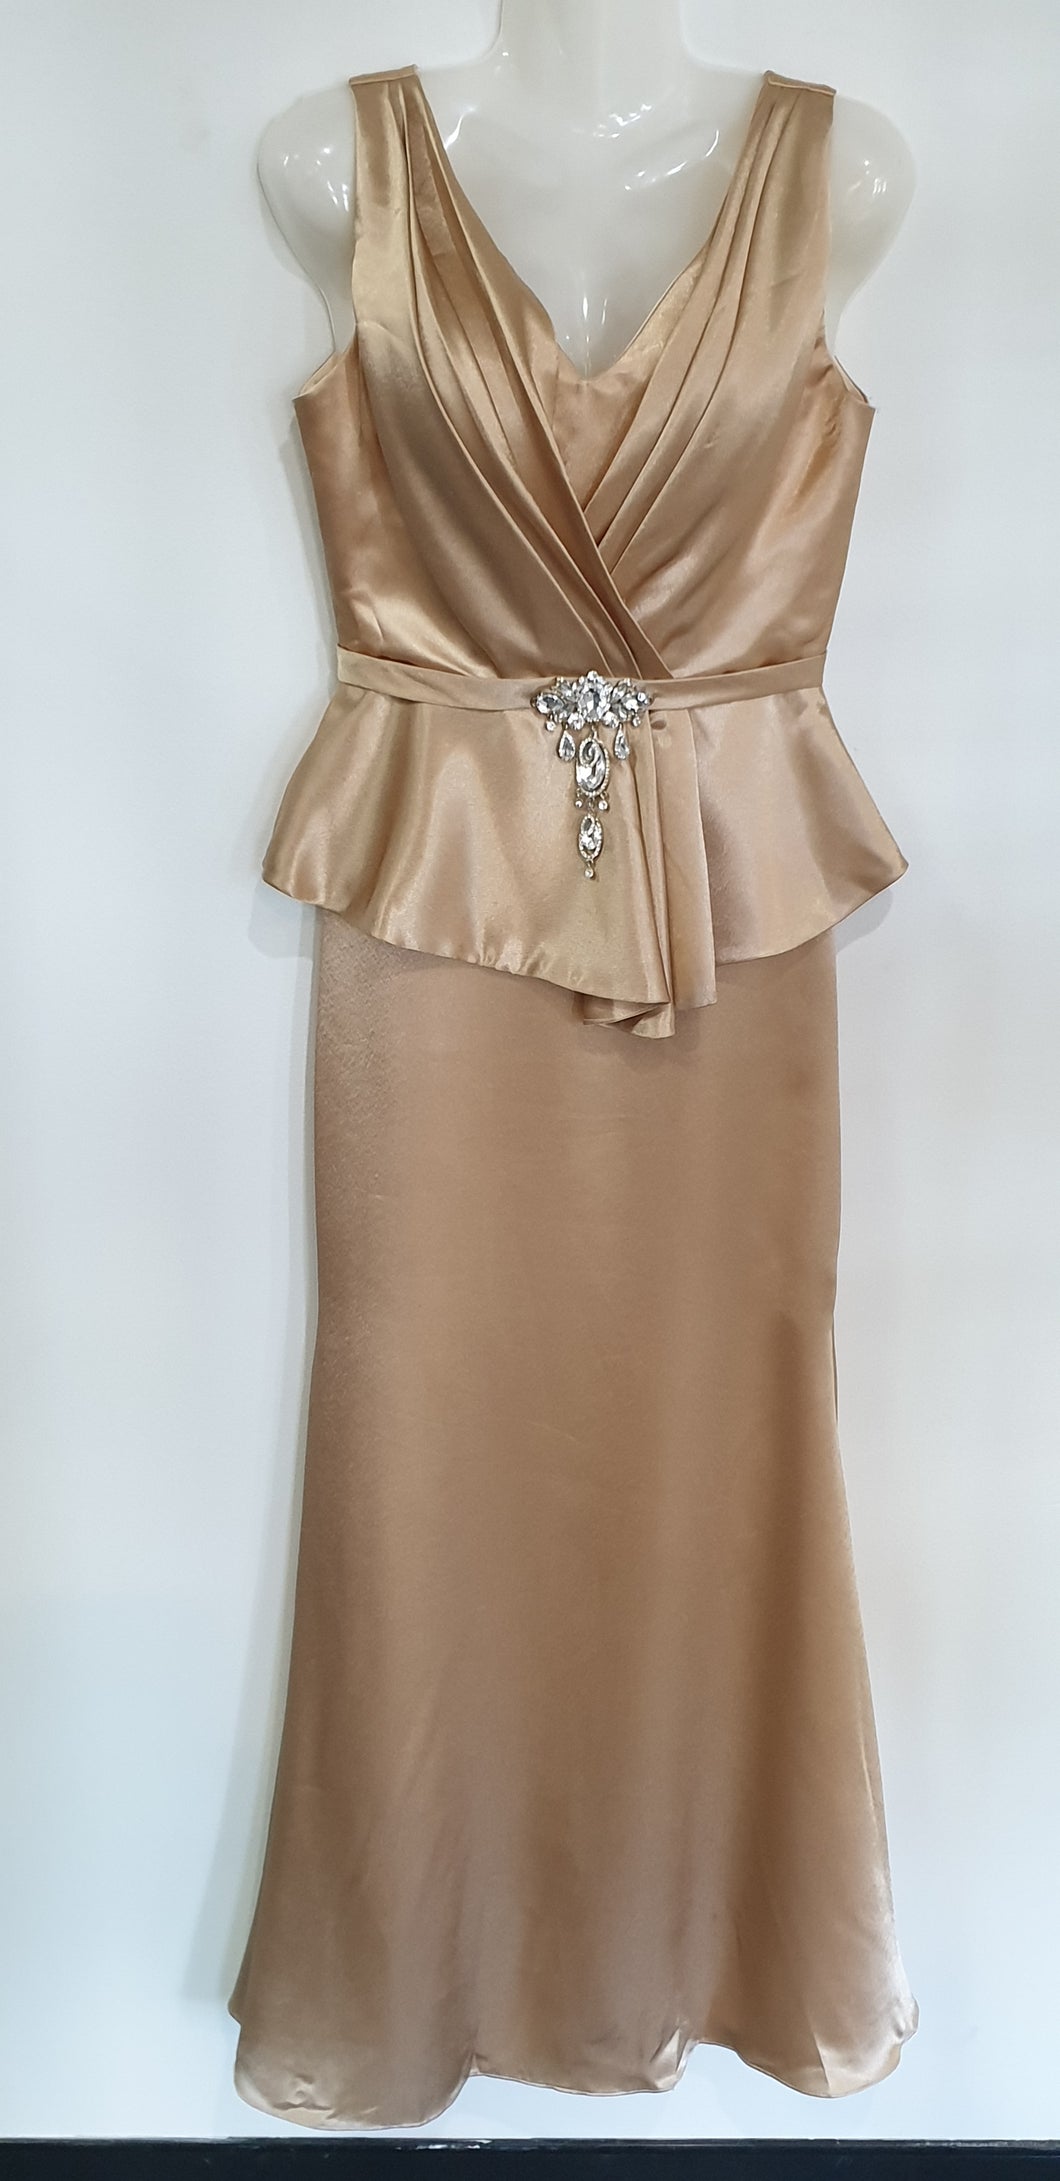 Gold Peplum Dress with Embellishment